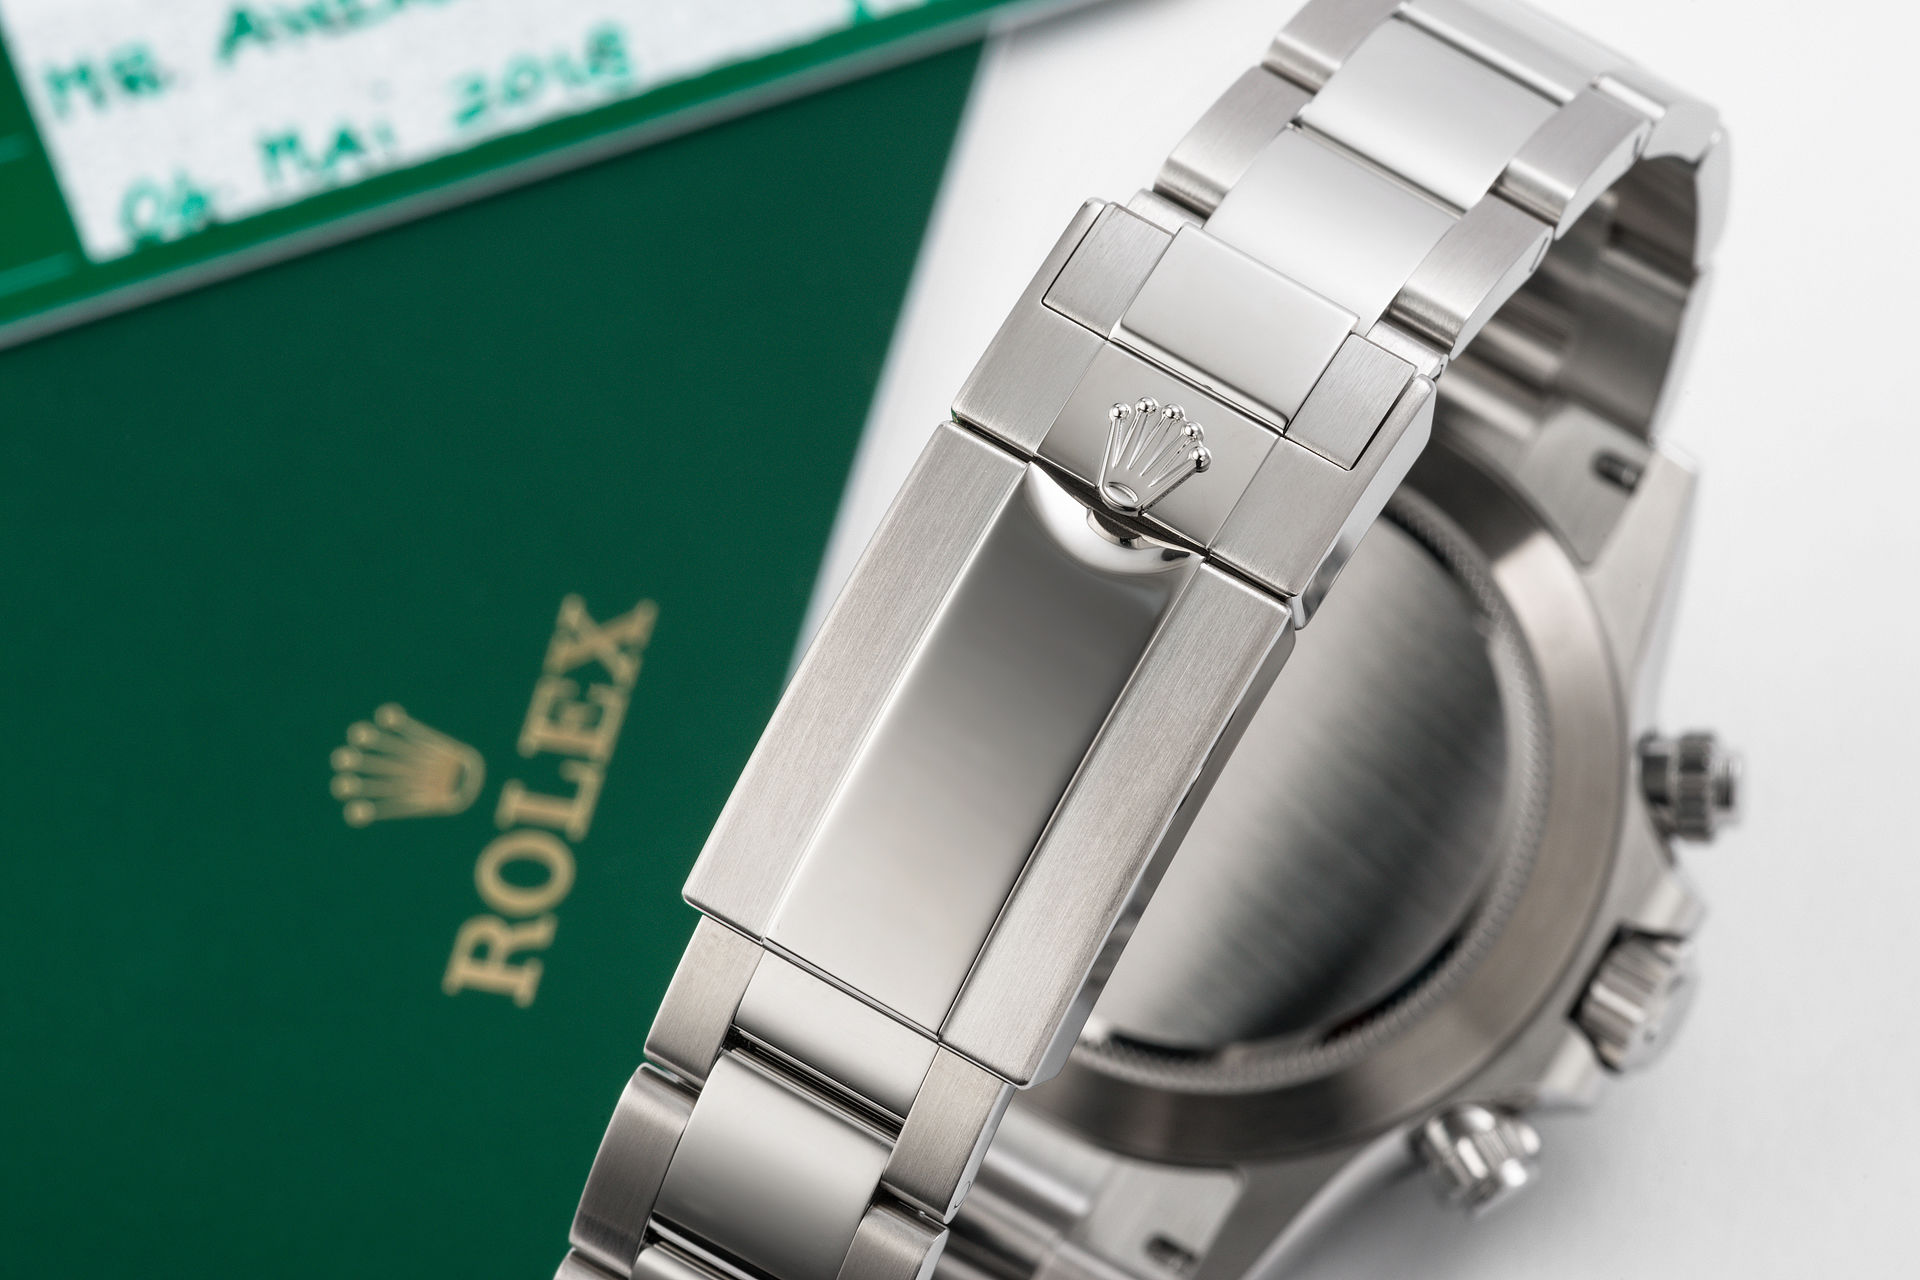 ref 116500LN | Brand New '5 Year Warranty' | Rolex Cosmograph Daytona